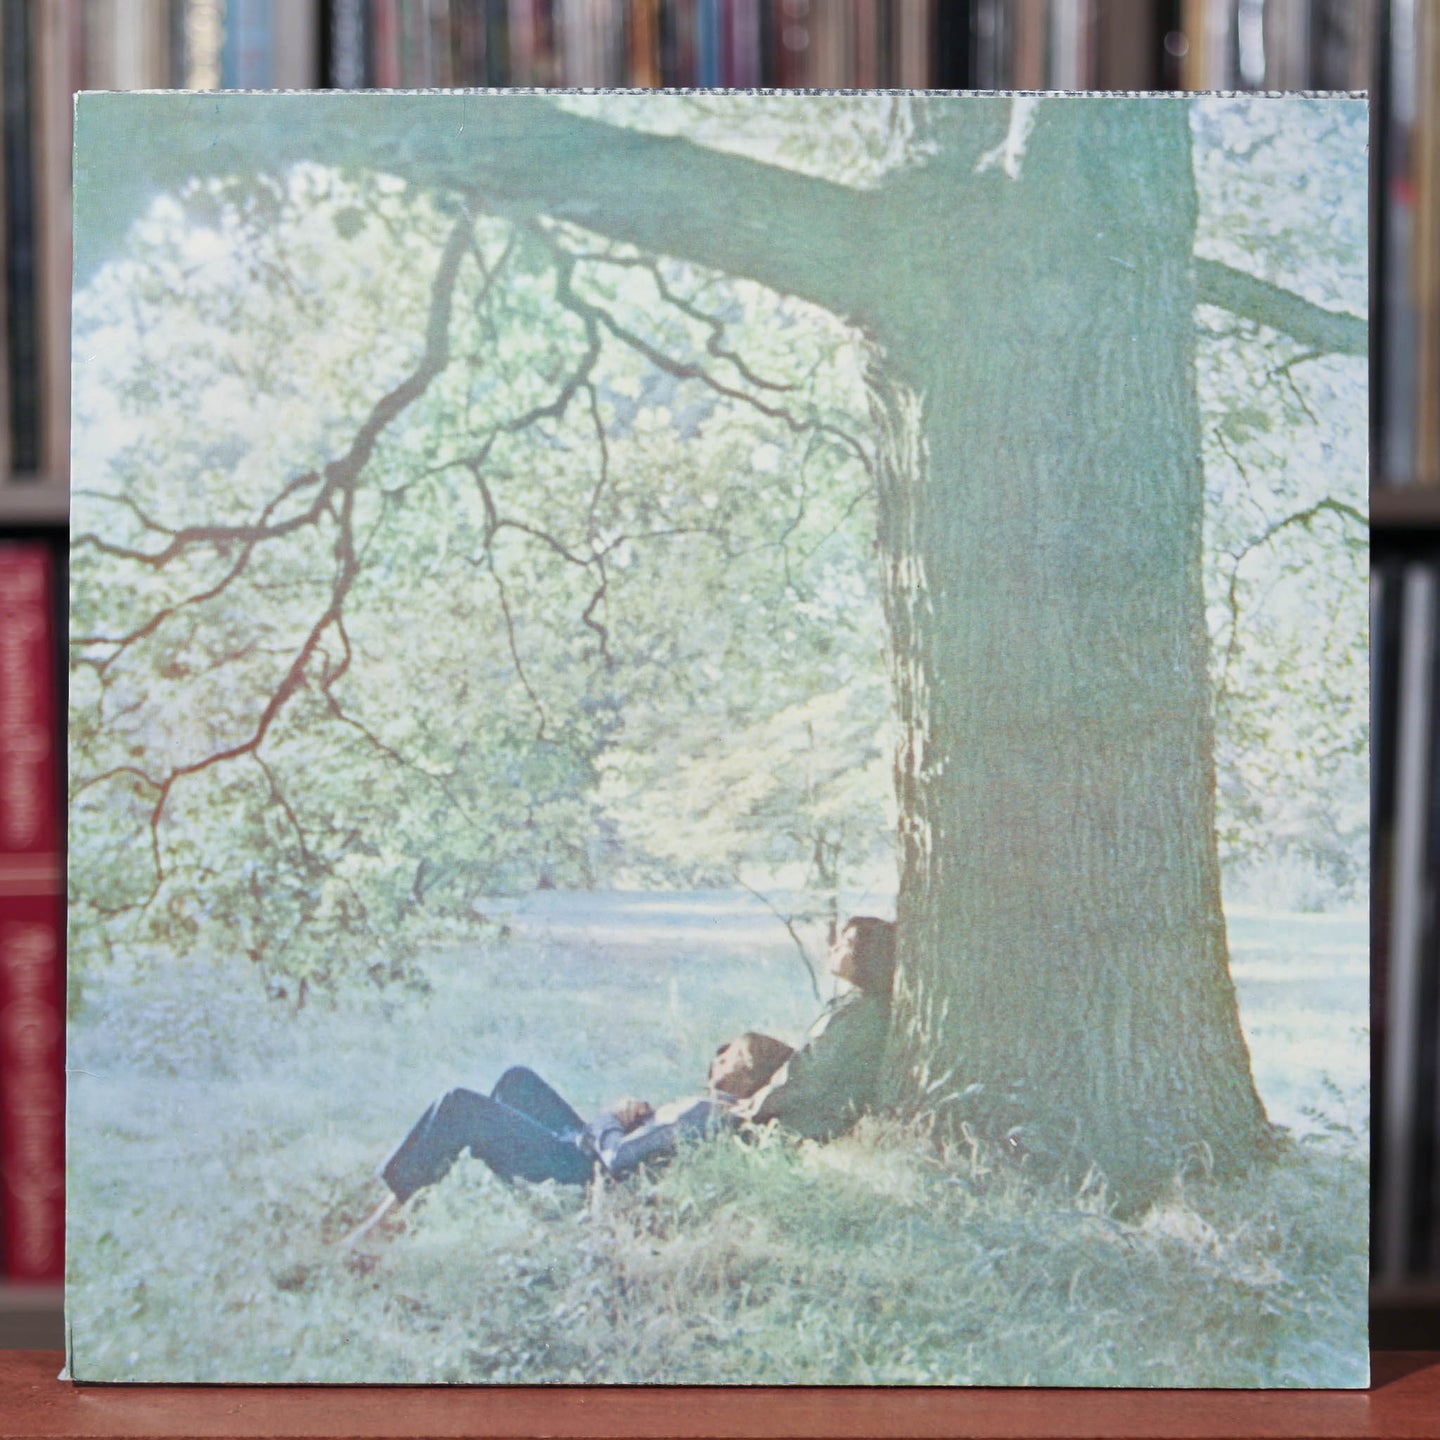 John Lennon/Plastic Ono Band - Self-Titled - UK Import - 1970 Apple, VG+/VG+